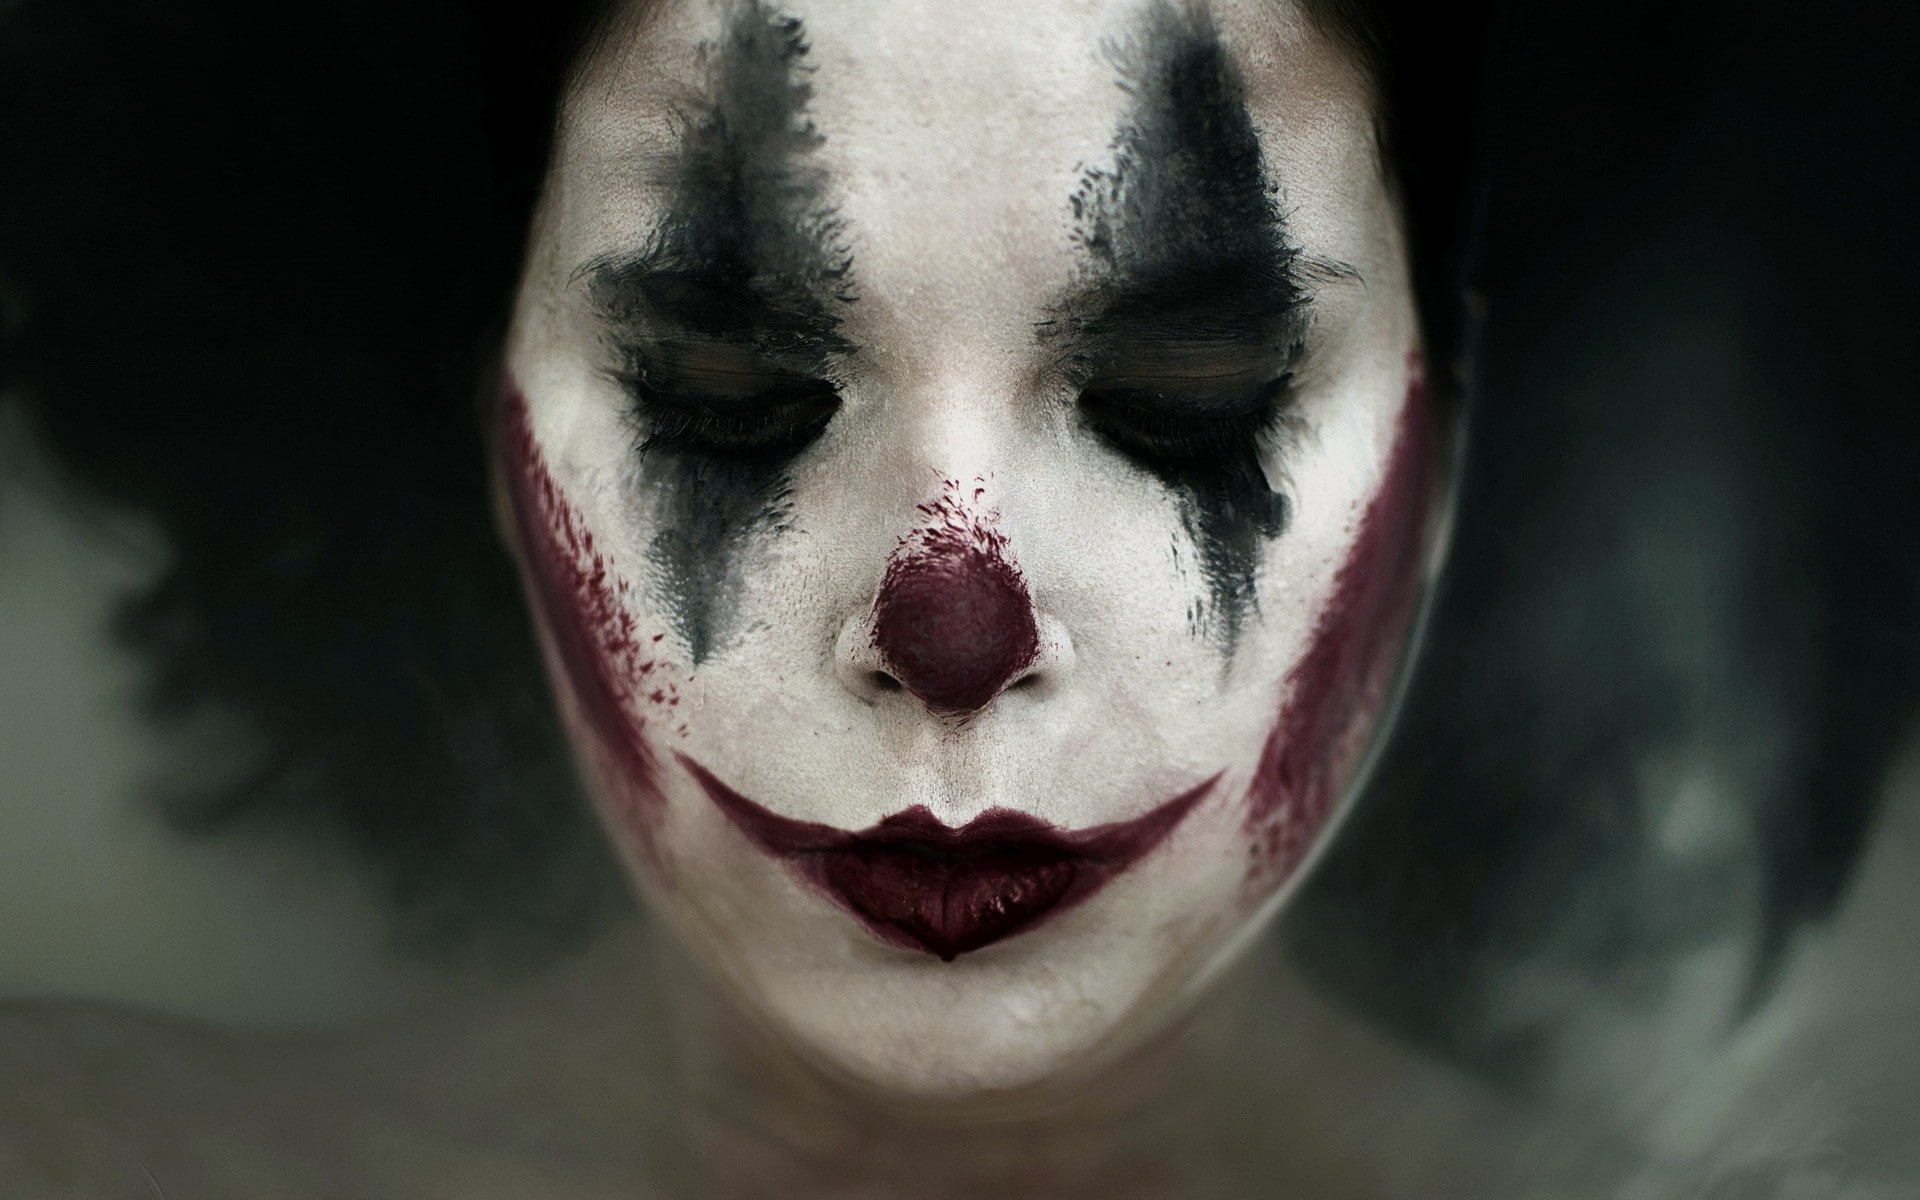 face, clowns, makeup, portrait, one person, eyes closed, close-up